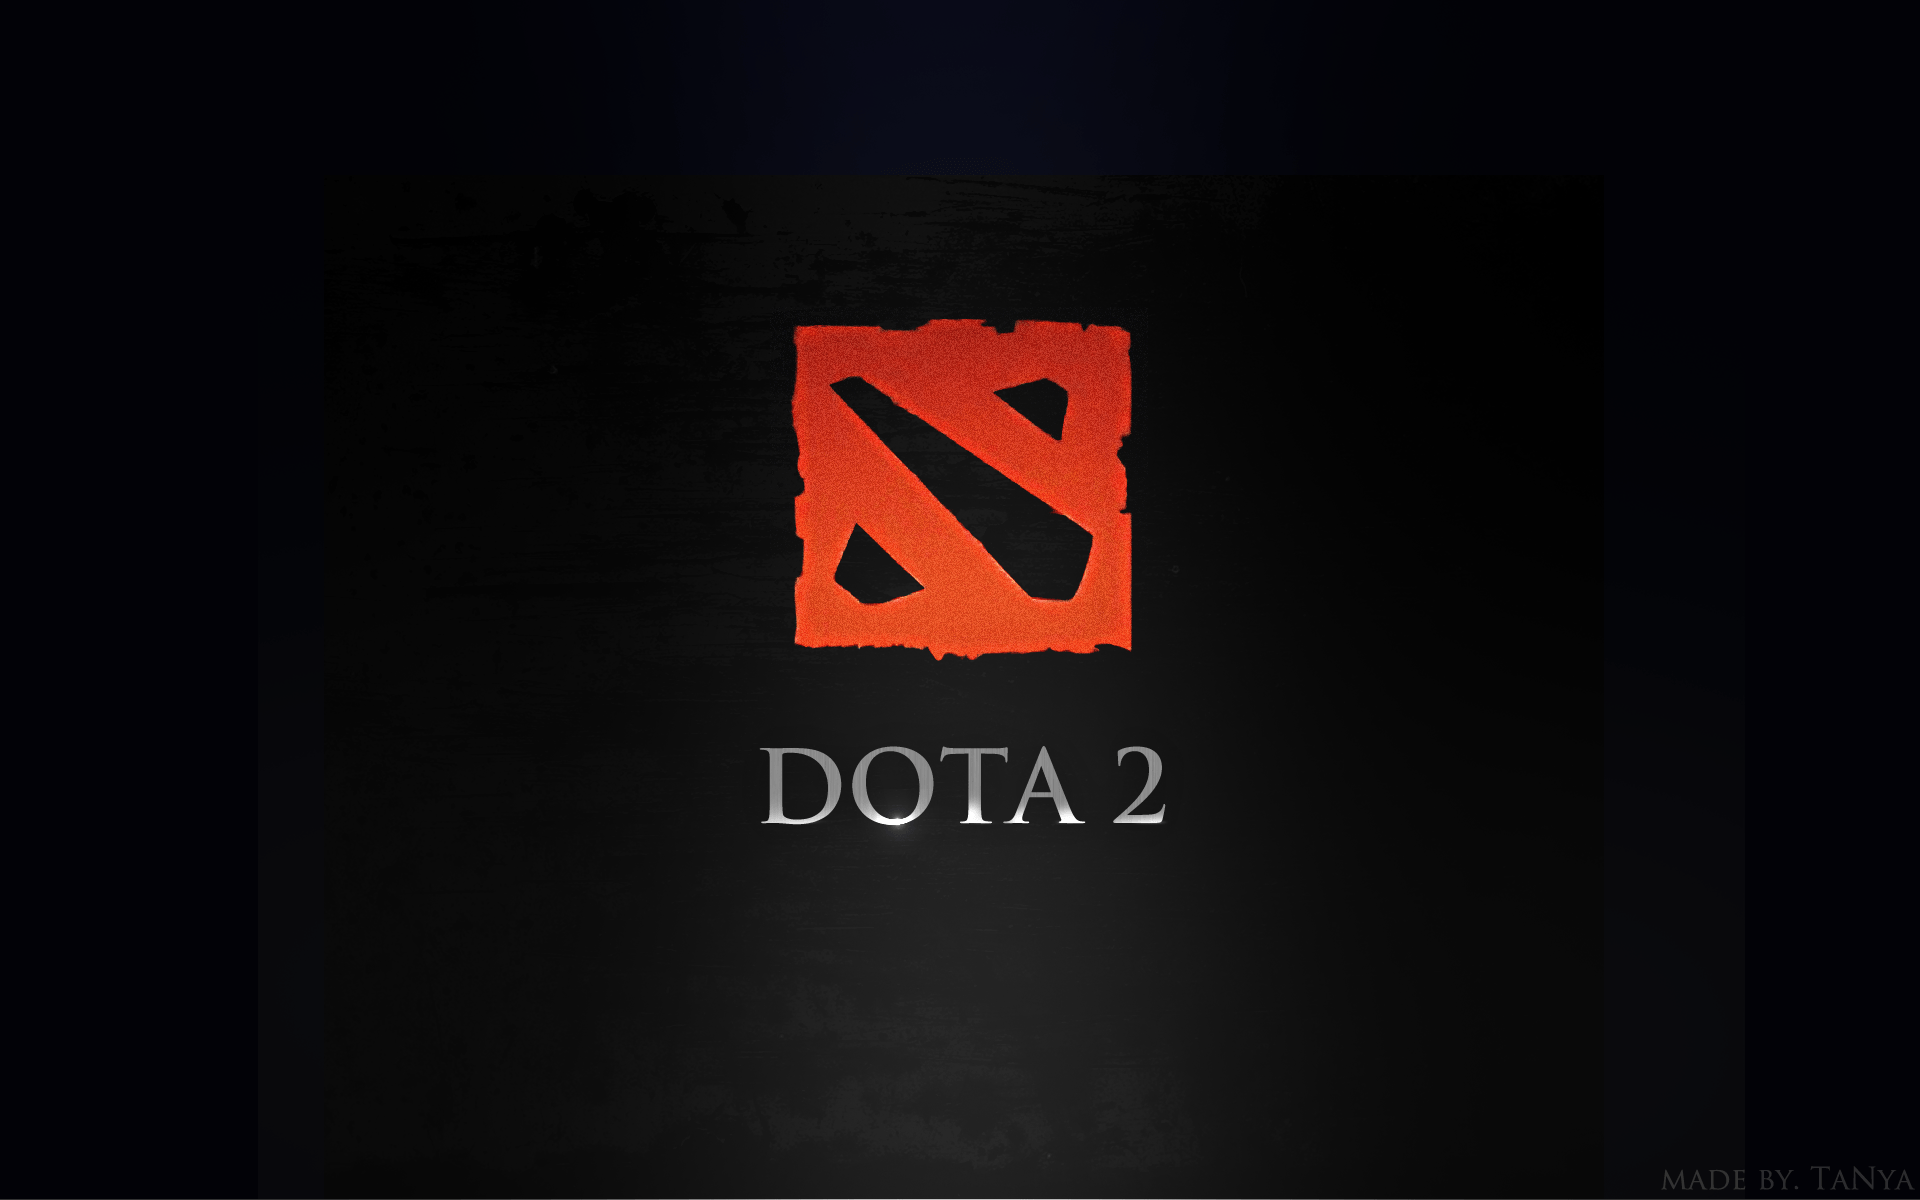 Steam Community - DOTA 2 logo wallpaper (1920x1200 size)_TaNya